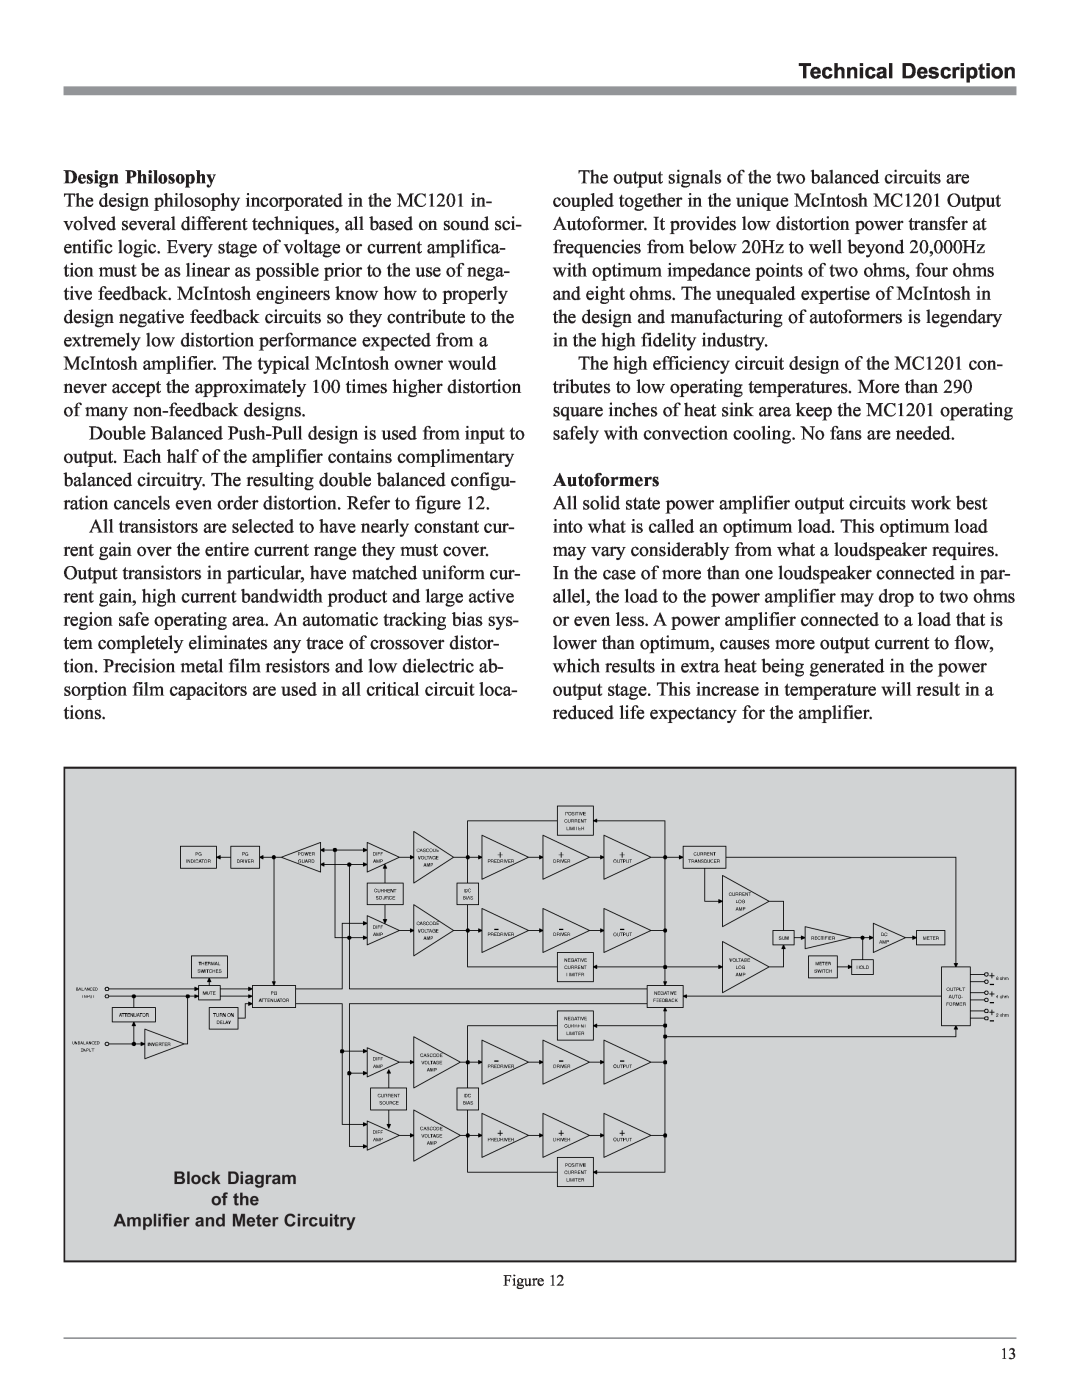 McIntosh MC1201 manual Technical Description, Design Philosophy, Autoformers, Block Diagram, of the 